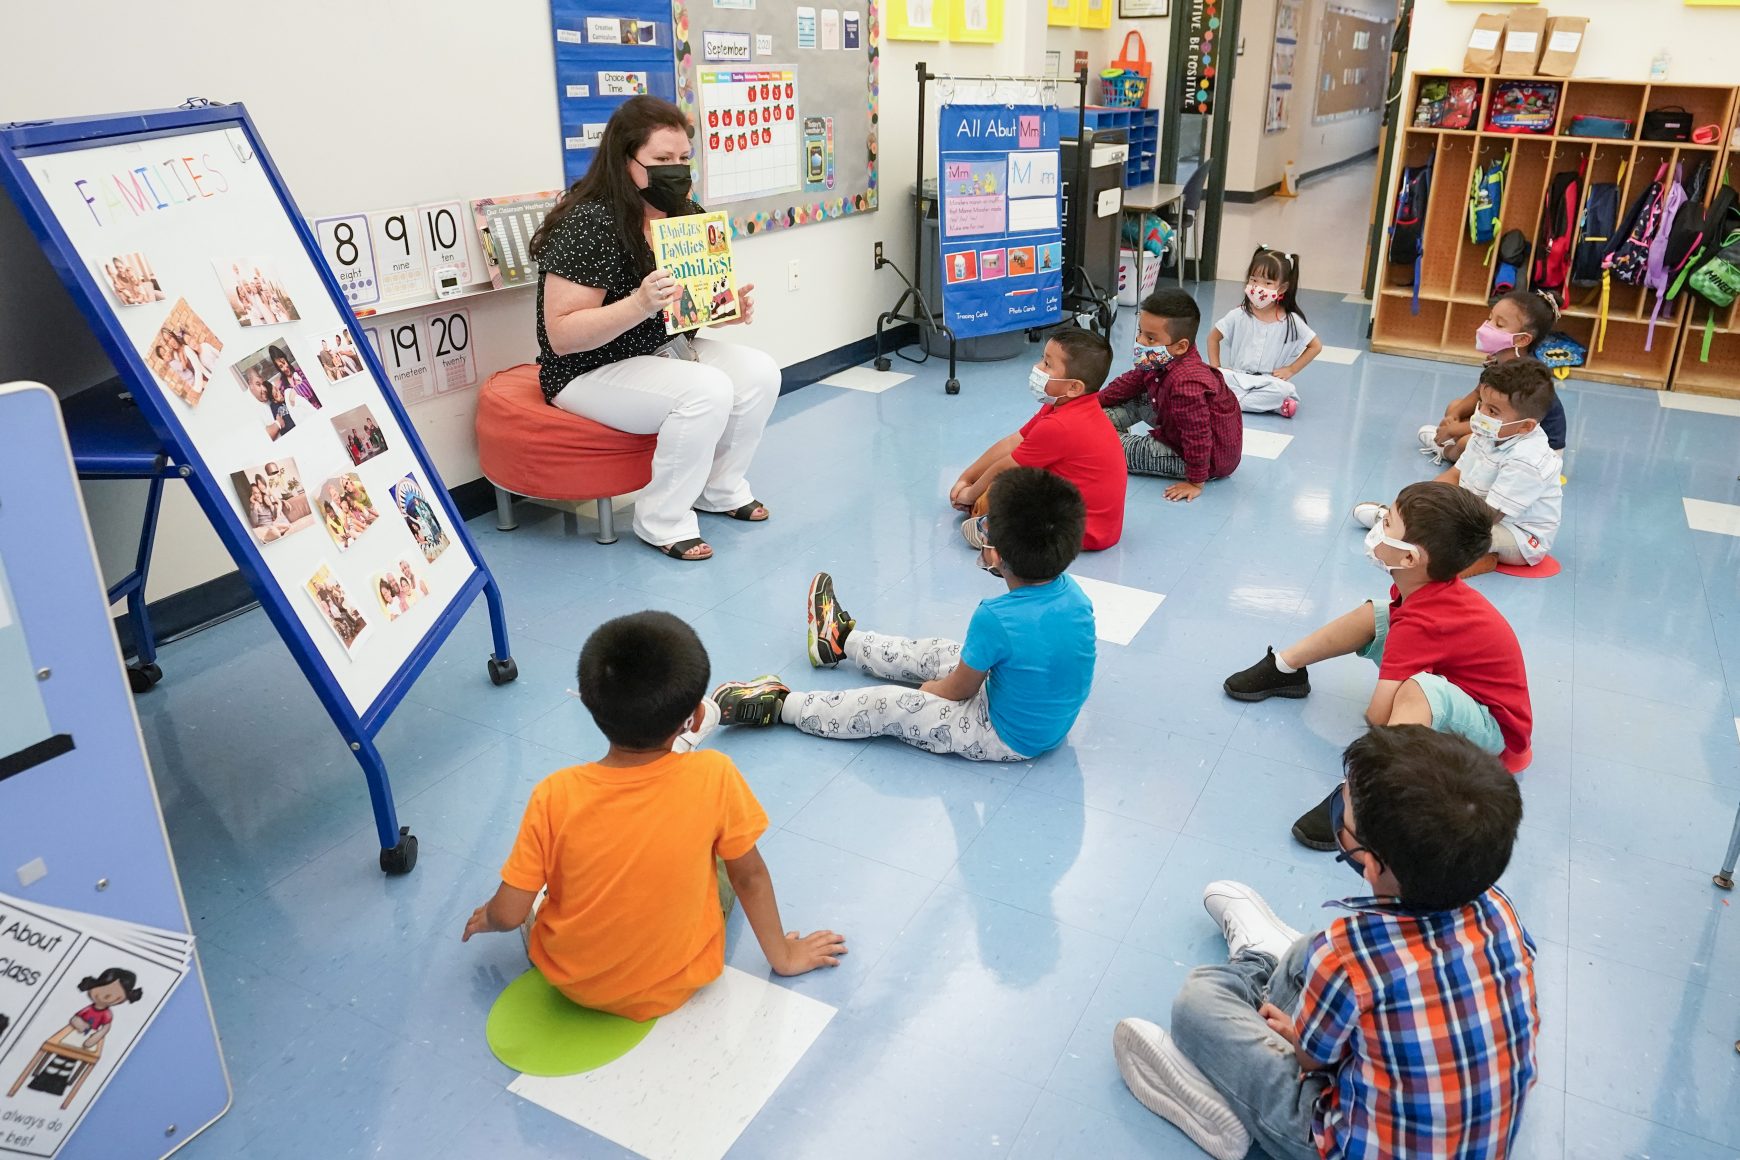 Students gathered around a teacher reading